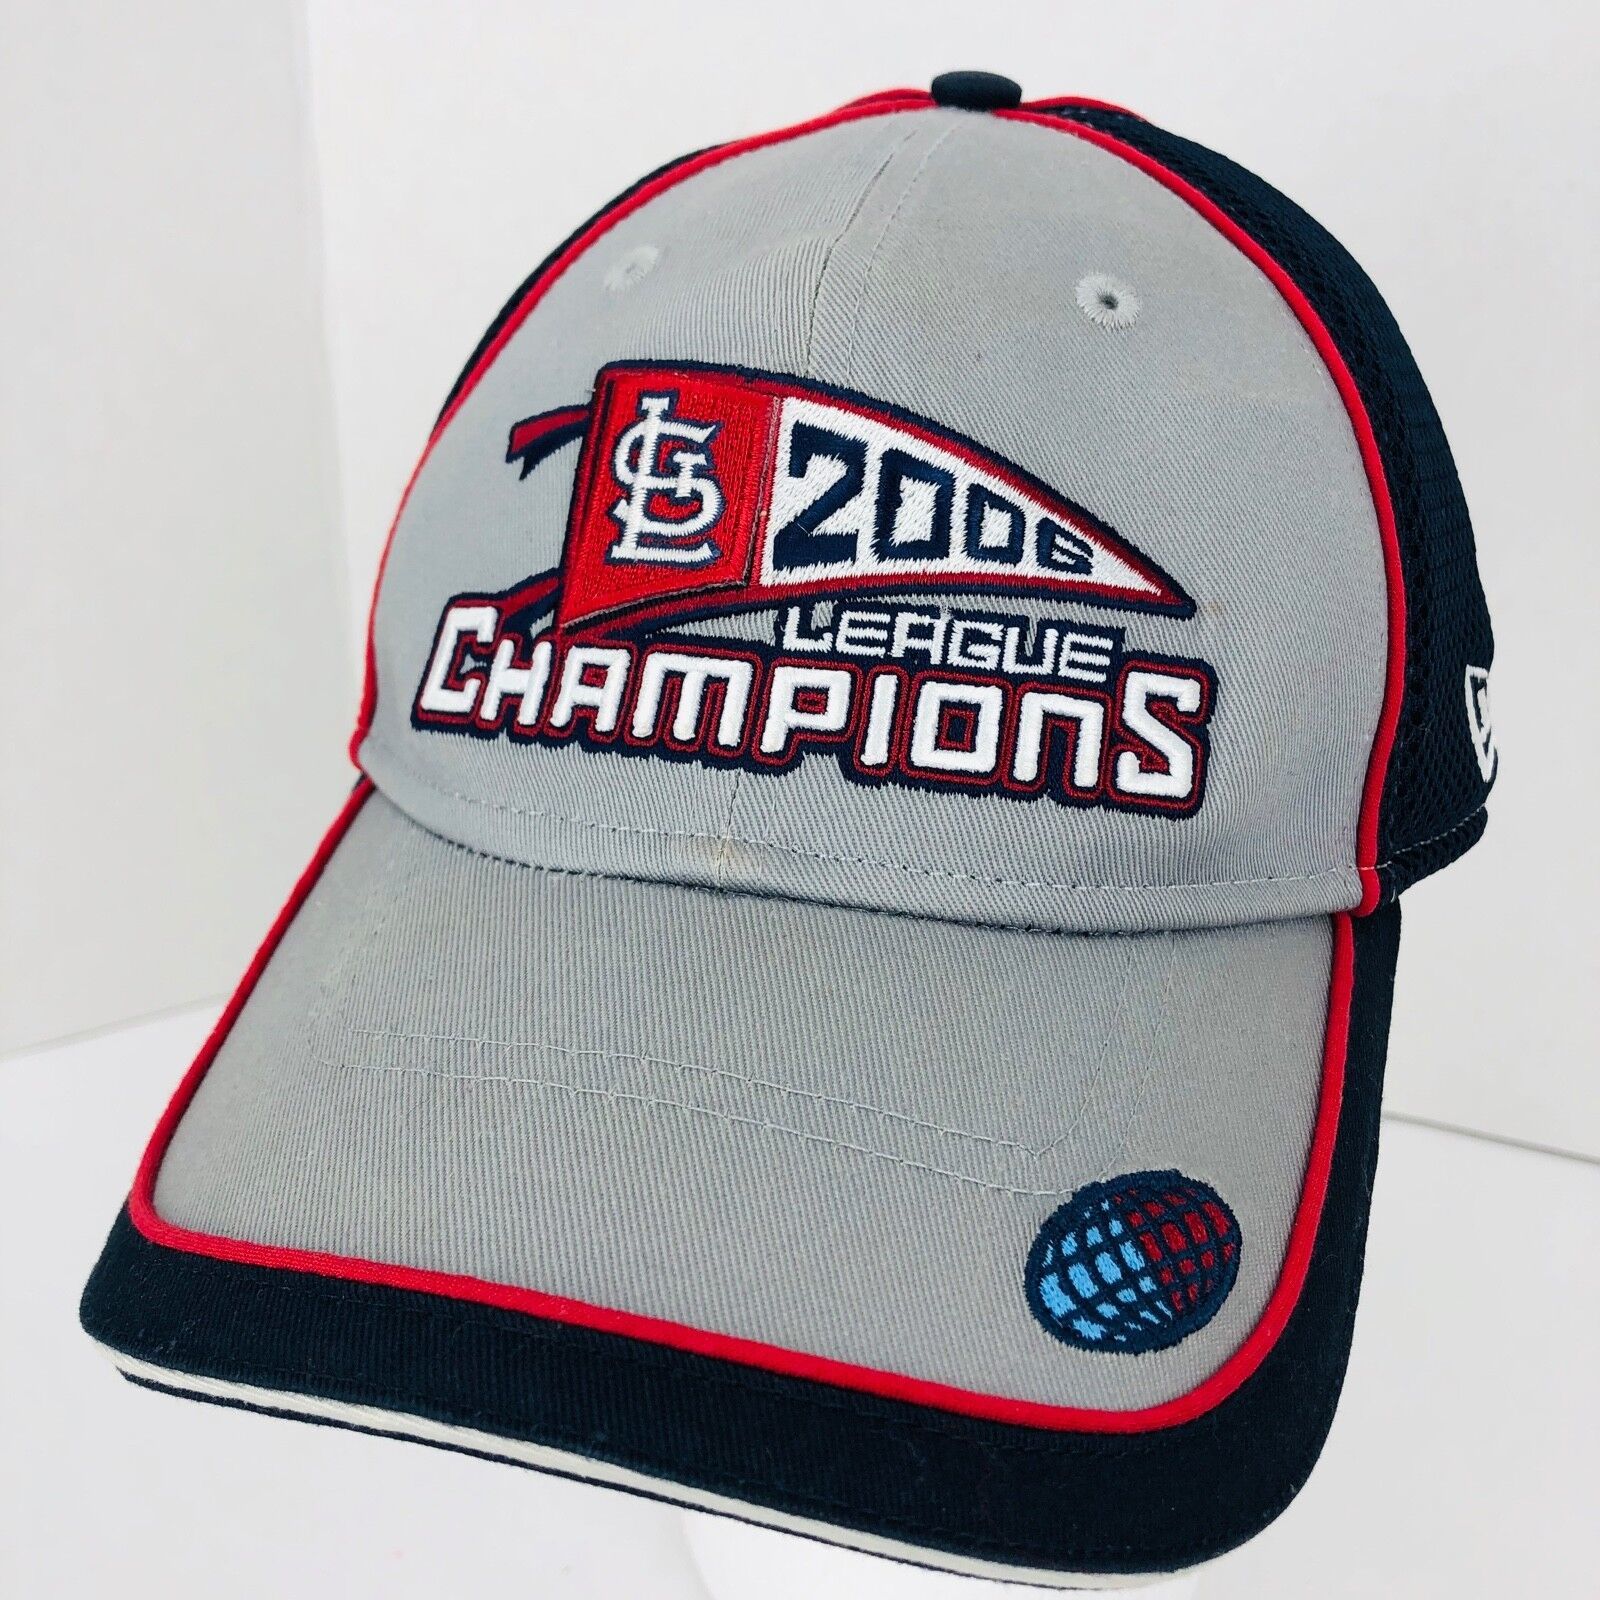 St Lewis Cardinals World Series League Champions 2006 New Era Hat Baseball Cap - $29.99